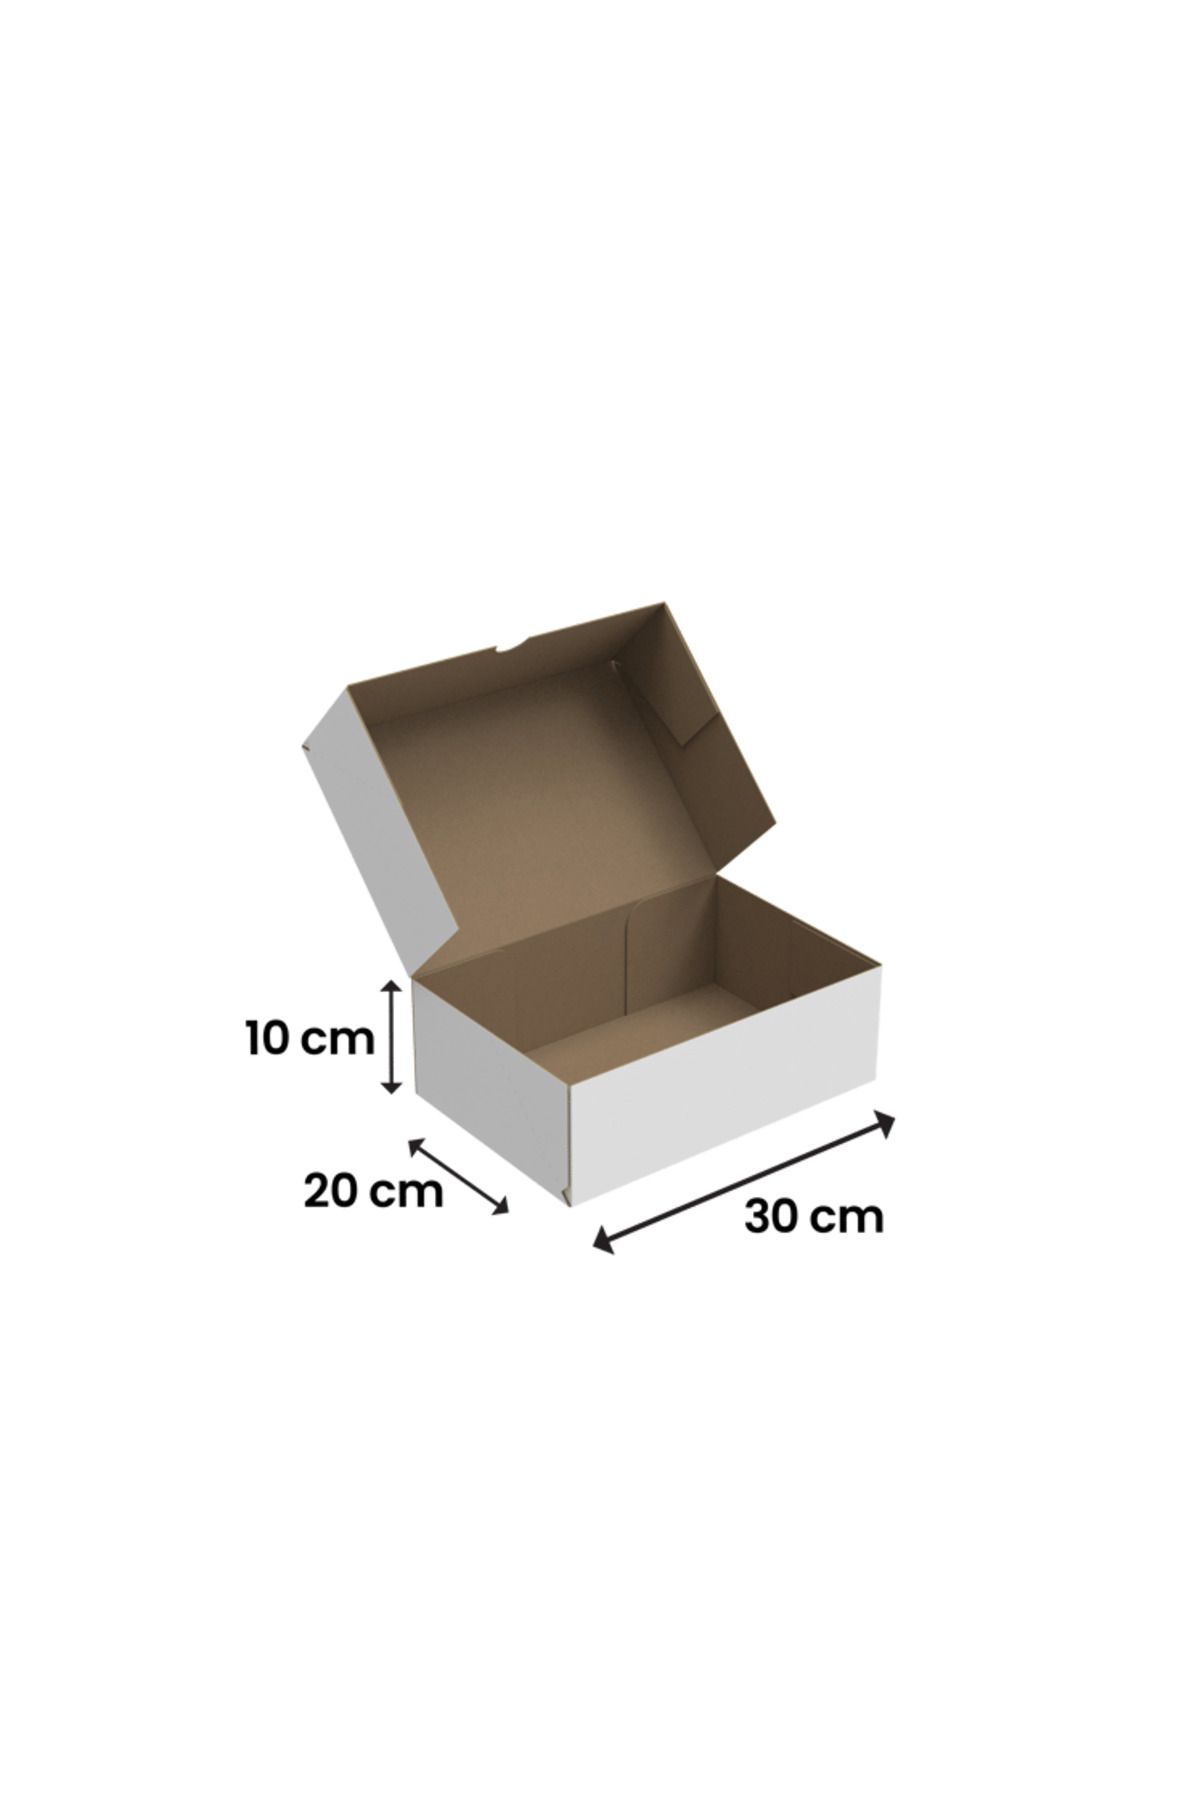 Packanya 30x20x10 - Beyaz Kesimli Karton Kutu - Internet Ve Kargo Kutusu - 500 Adet